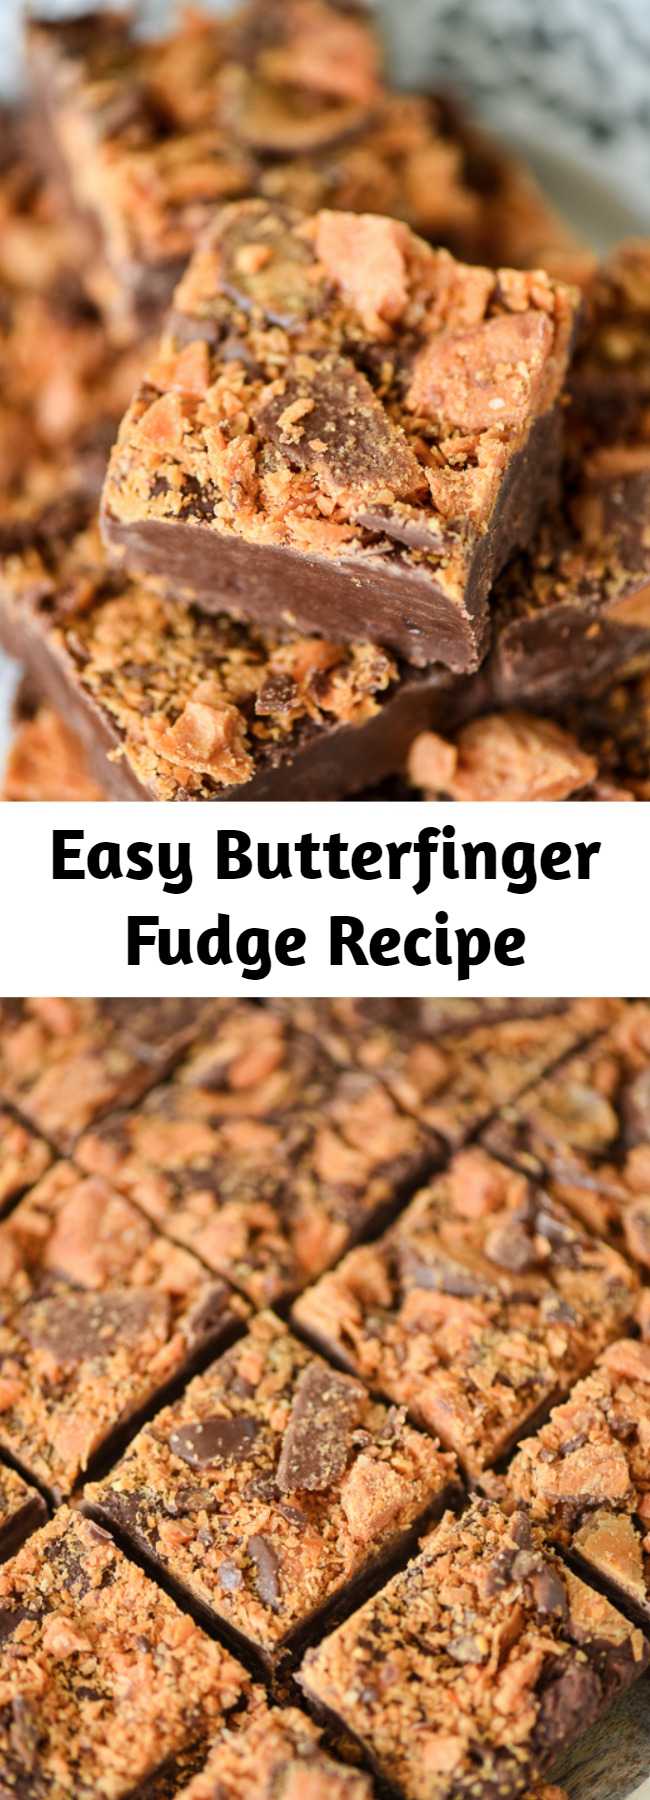 Easy Butterfinger Fudge Recipe - Easy chocolate fudge recipe topped with Butterfinger candy.